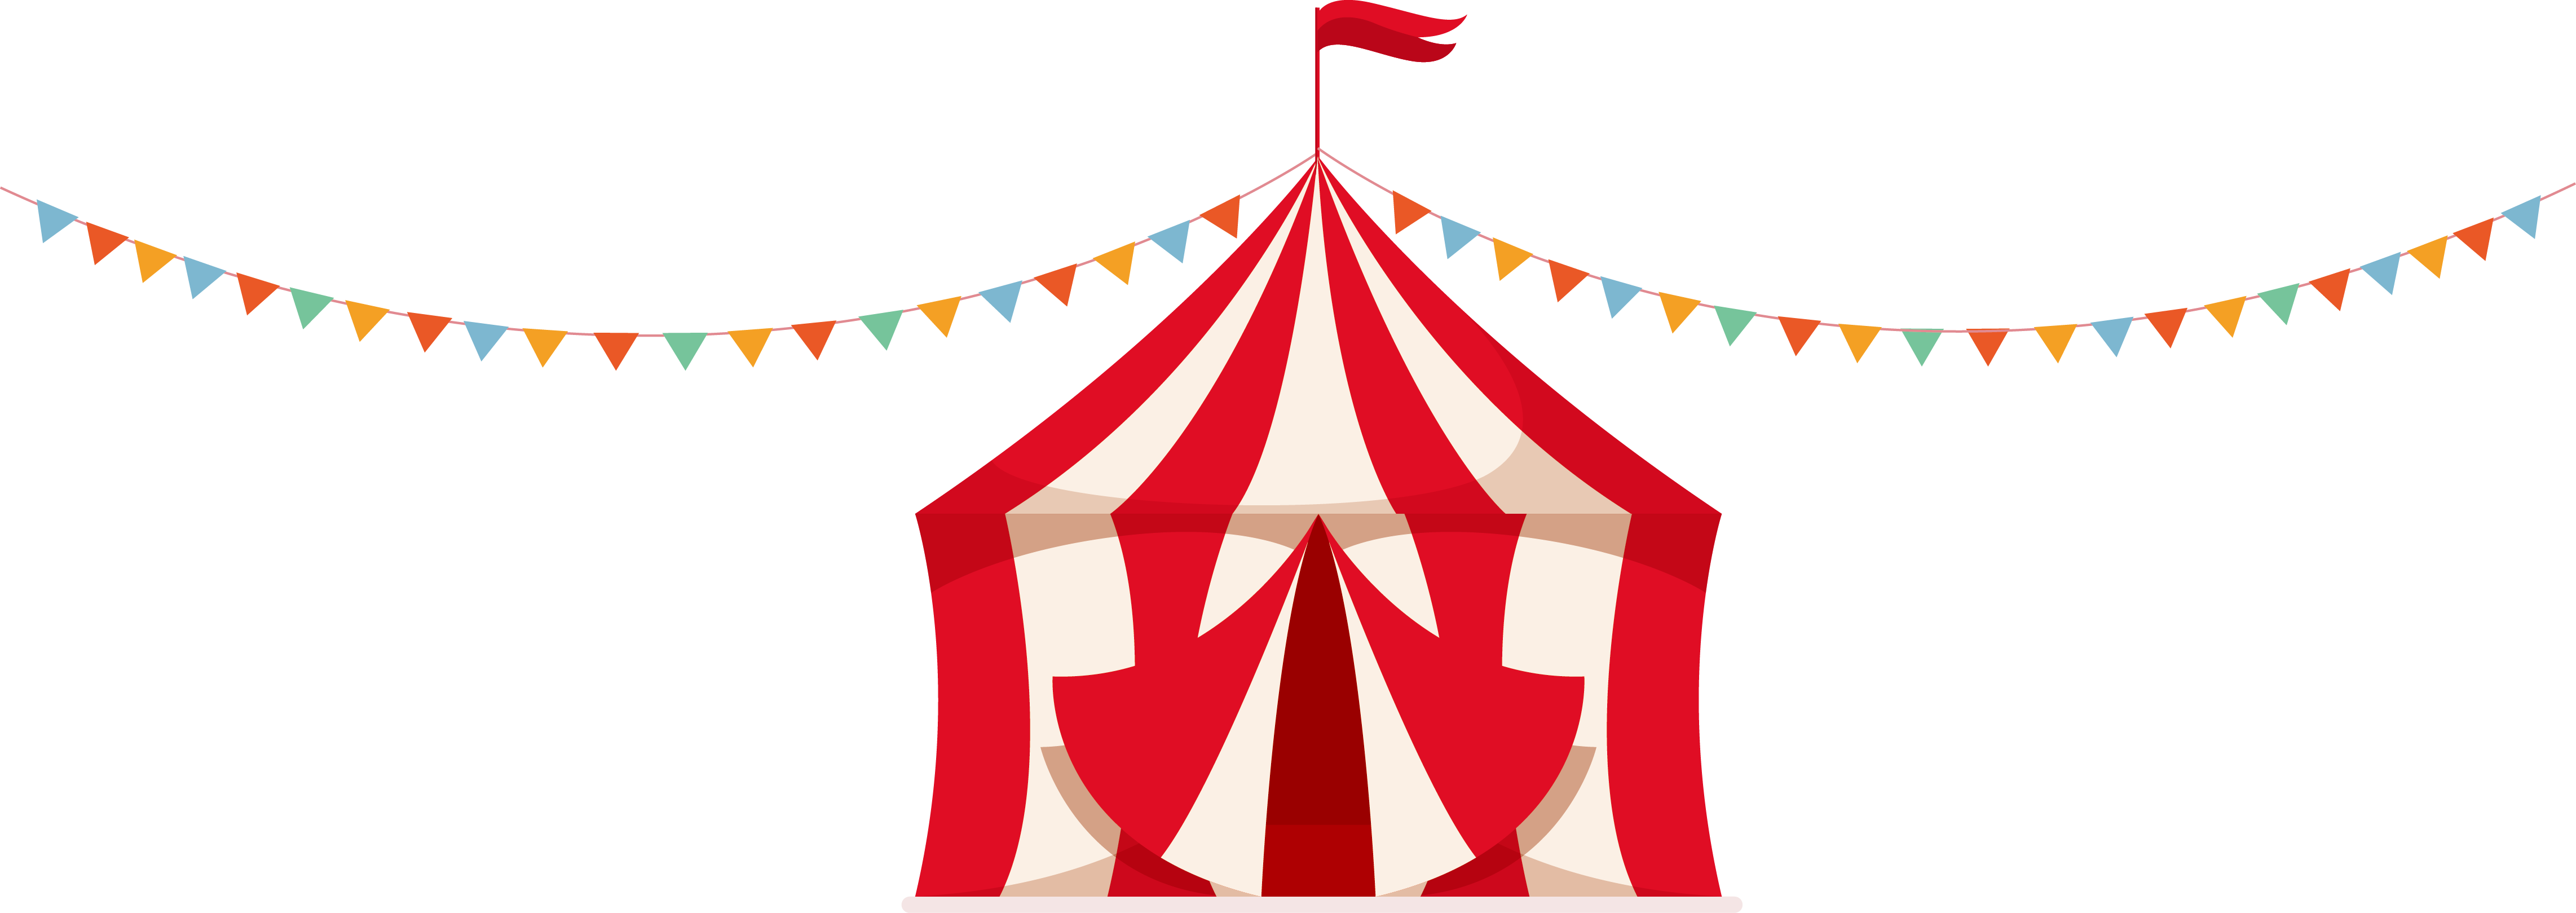 Circus Tent Carnival - Cute circus tent vector png download - 4568*1619 ...